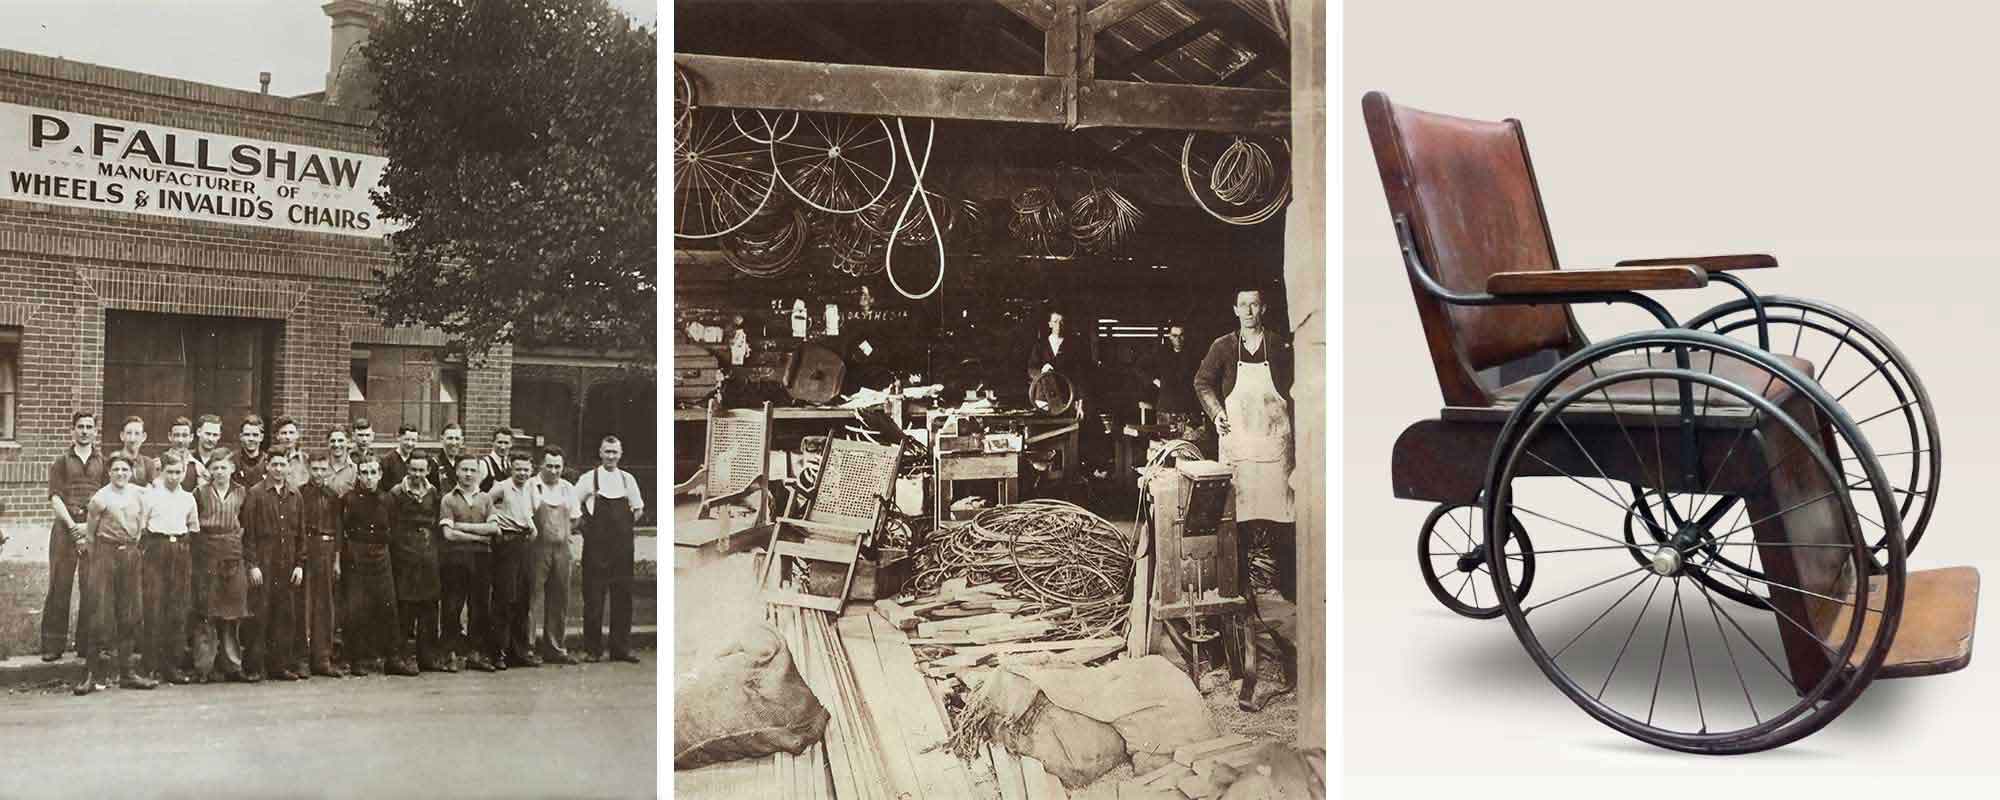 Historical timeline of Fallshaw wheels and castors